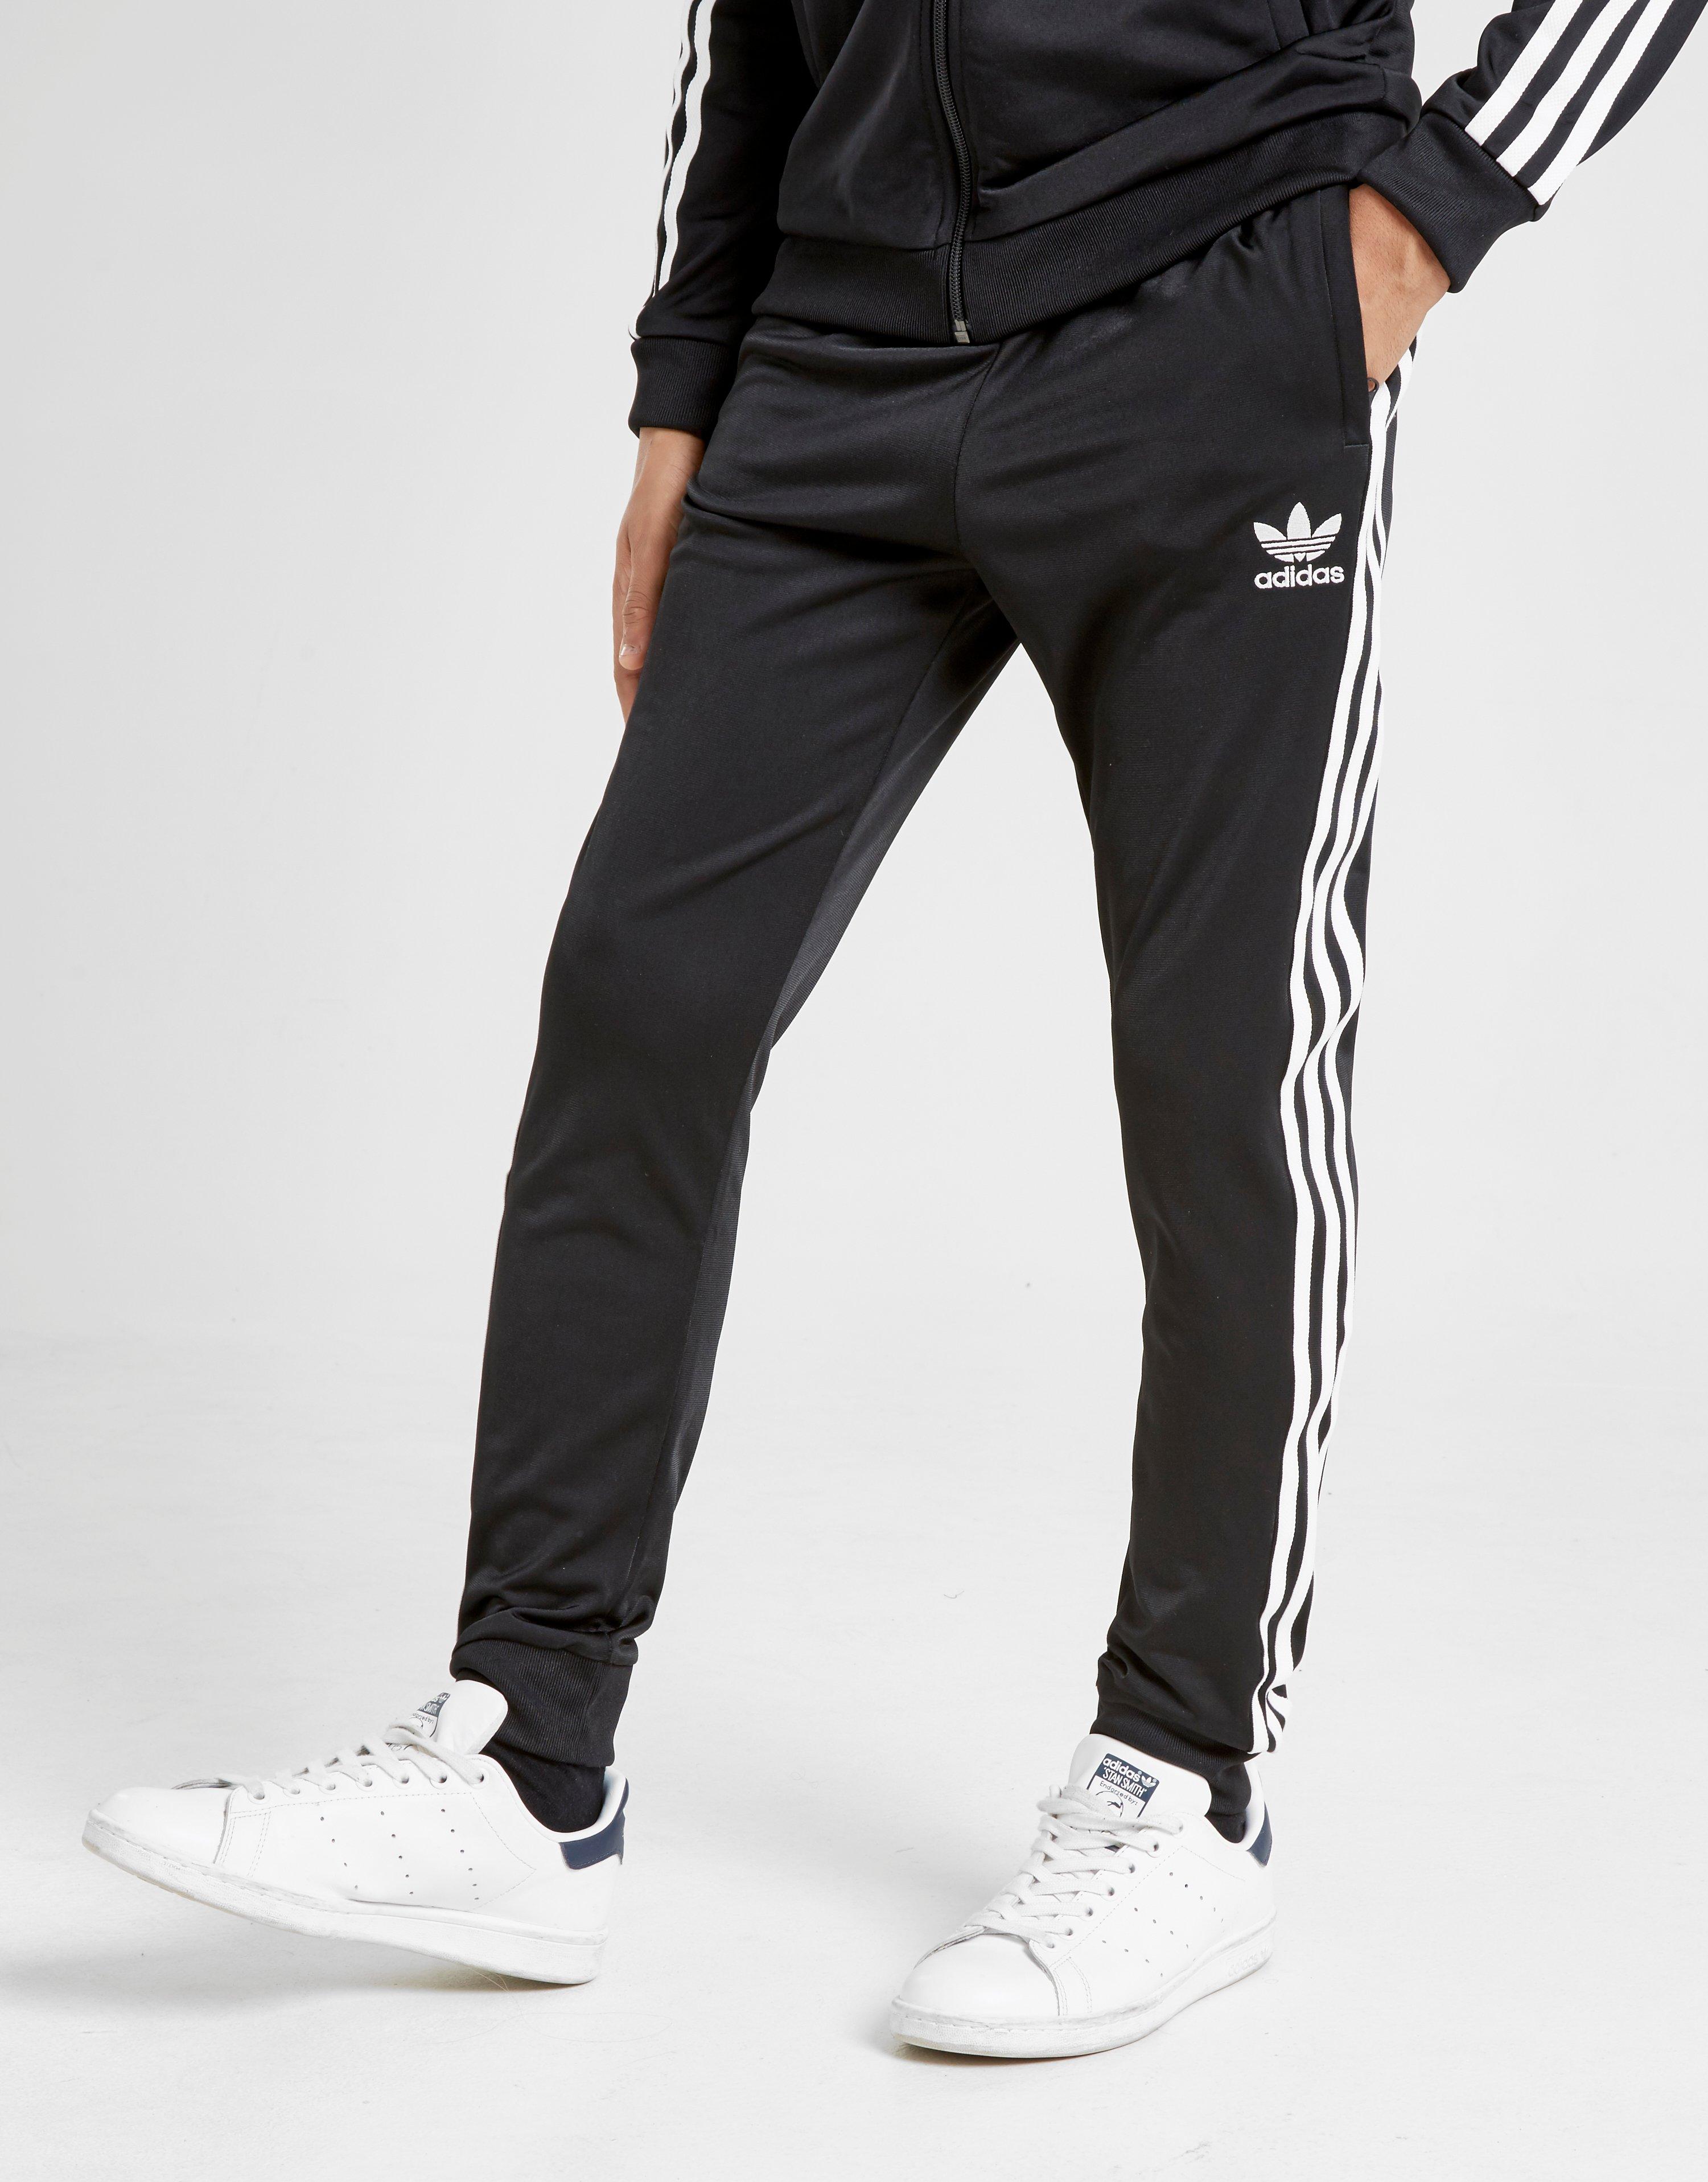 Compra adidas Originals pantalón de chándal Superstar júnior en Negro